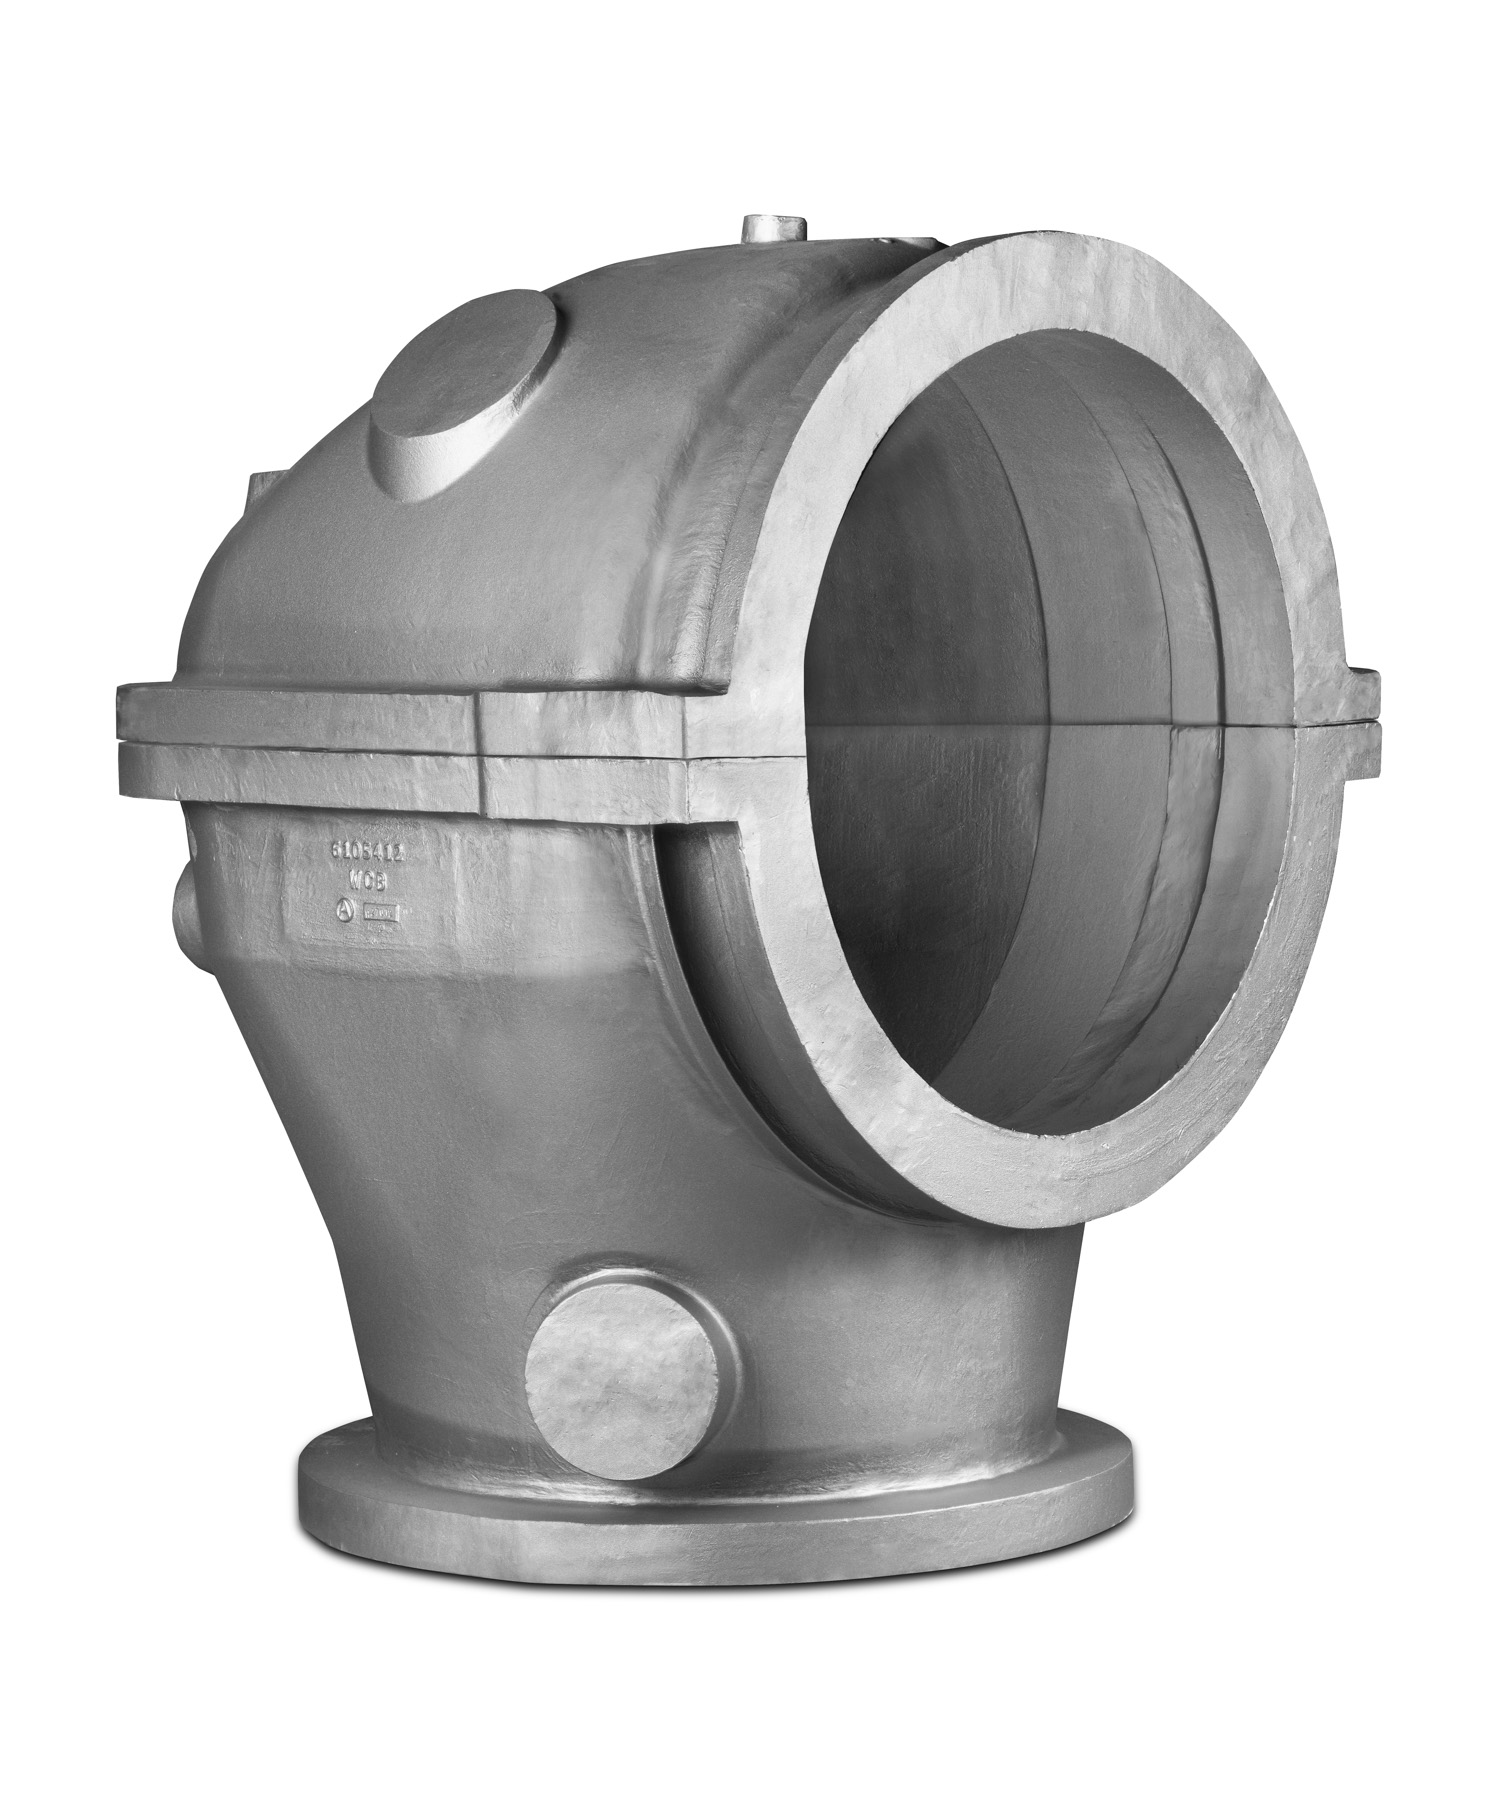 Steam turbine upper and lower casing